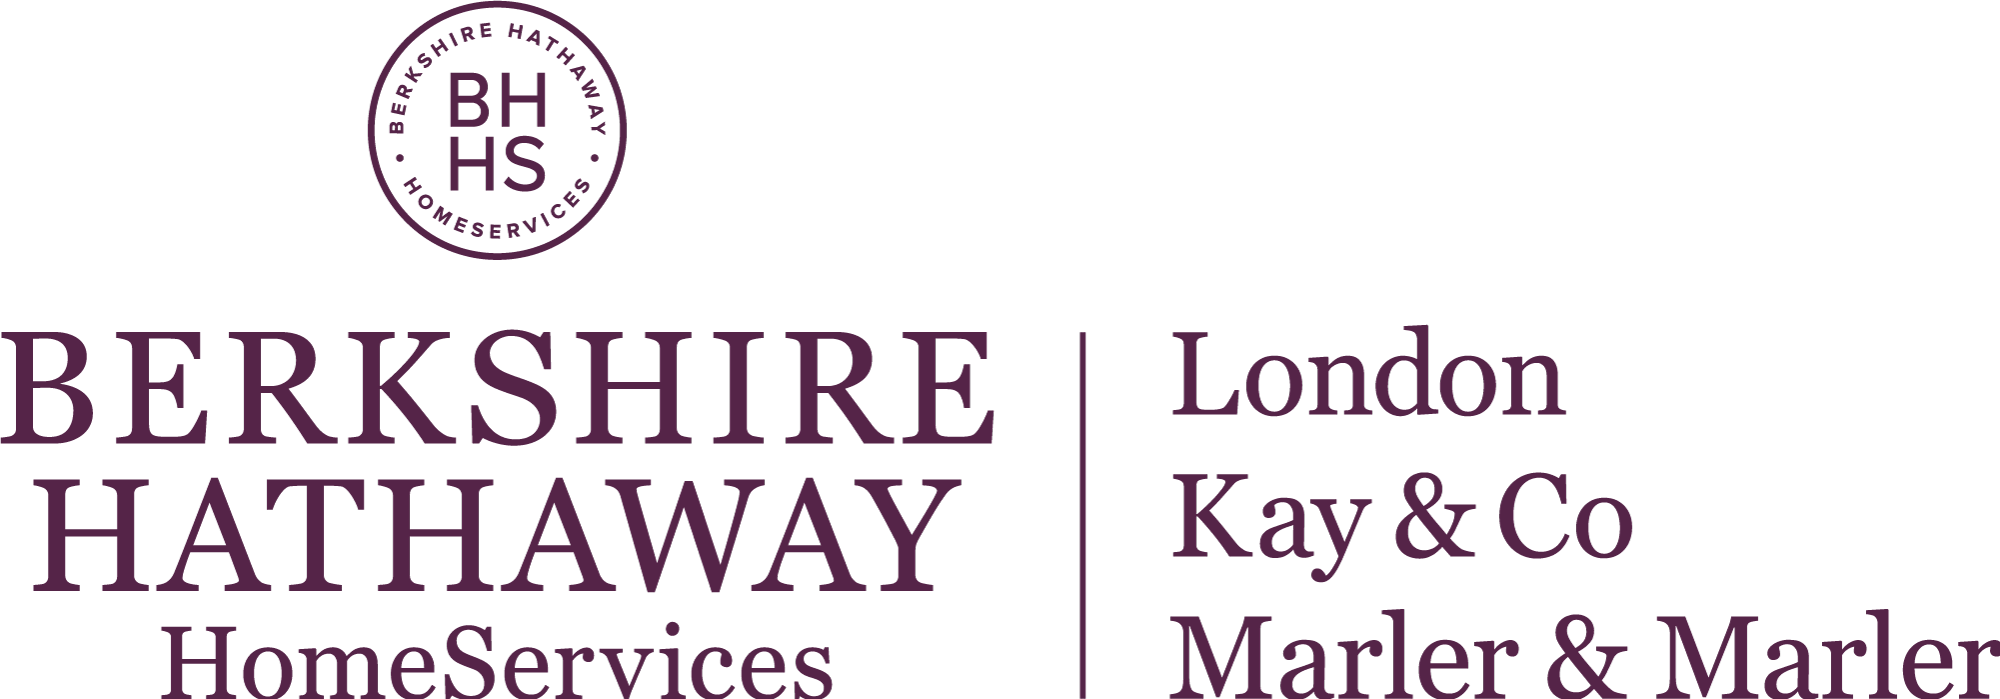 Kings Cross Estate Agents - Berkshire Hathaway HomeServices London Kay & Co logo